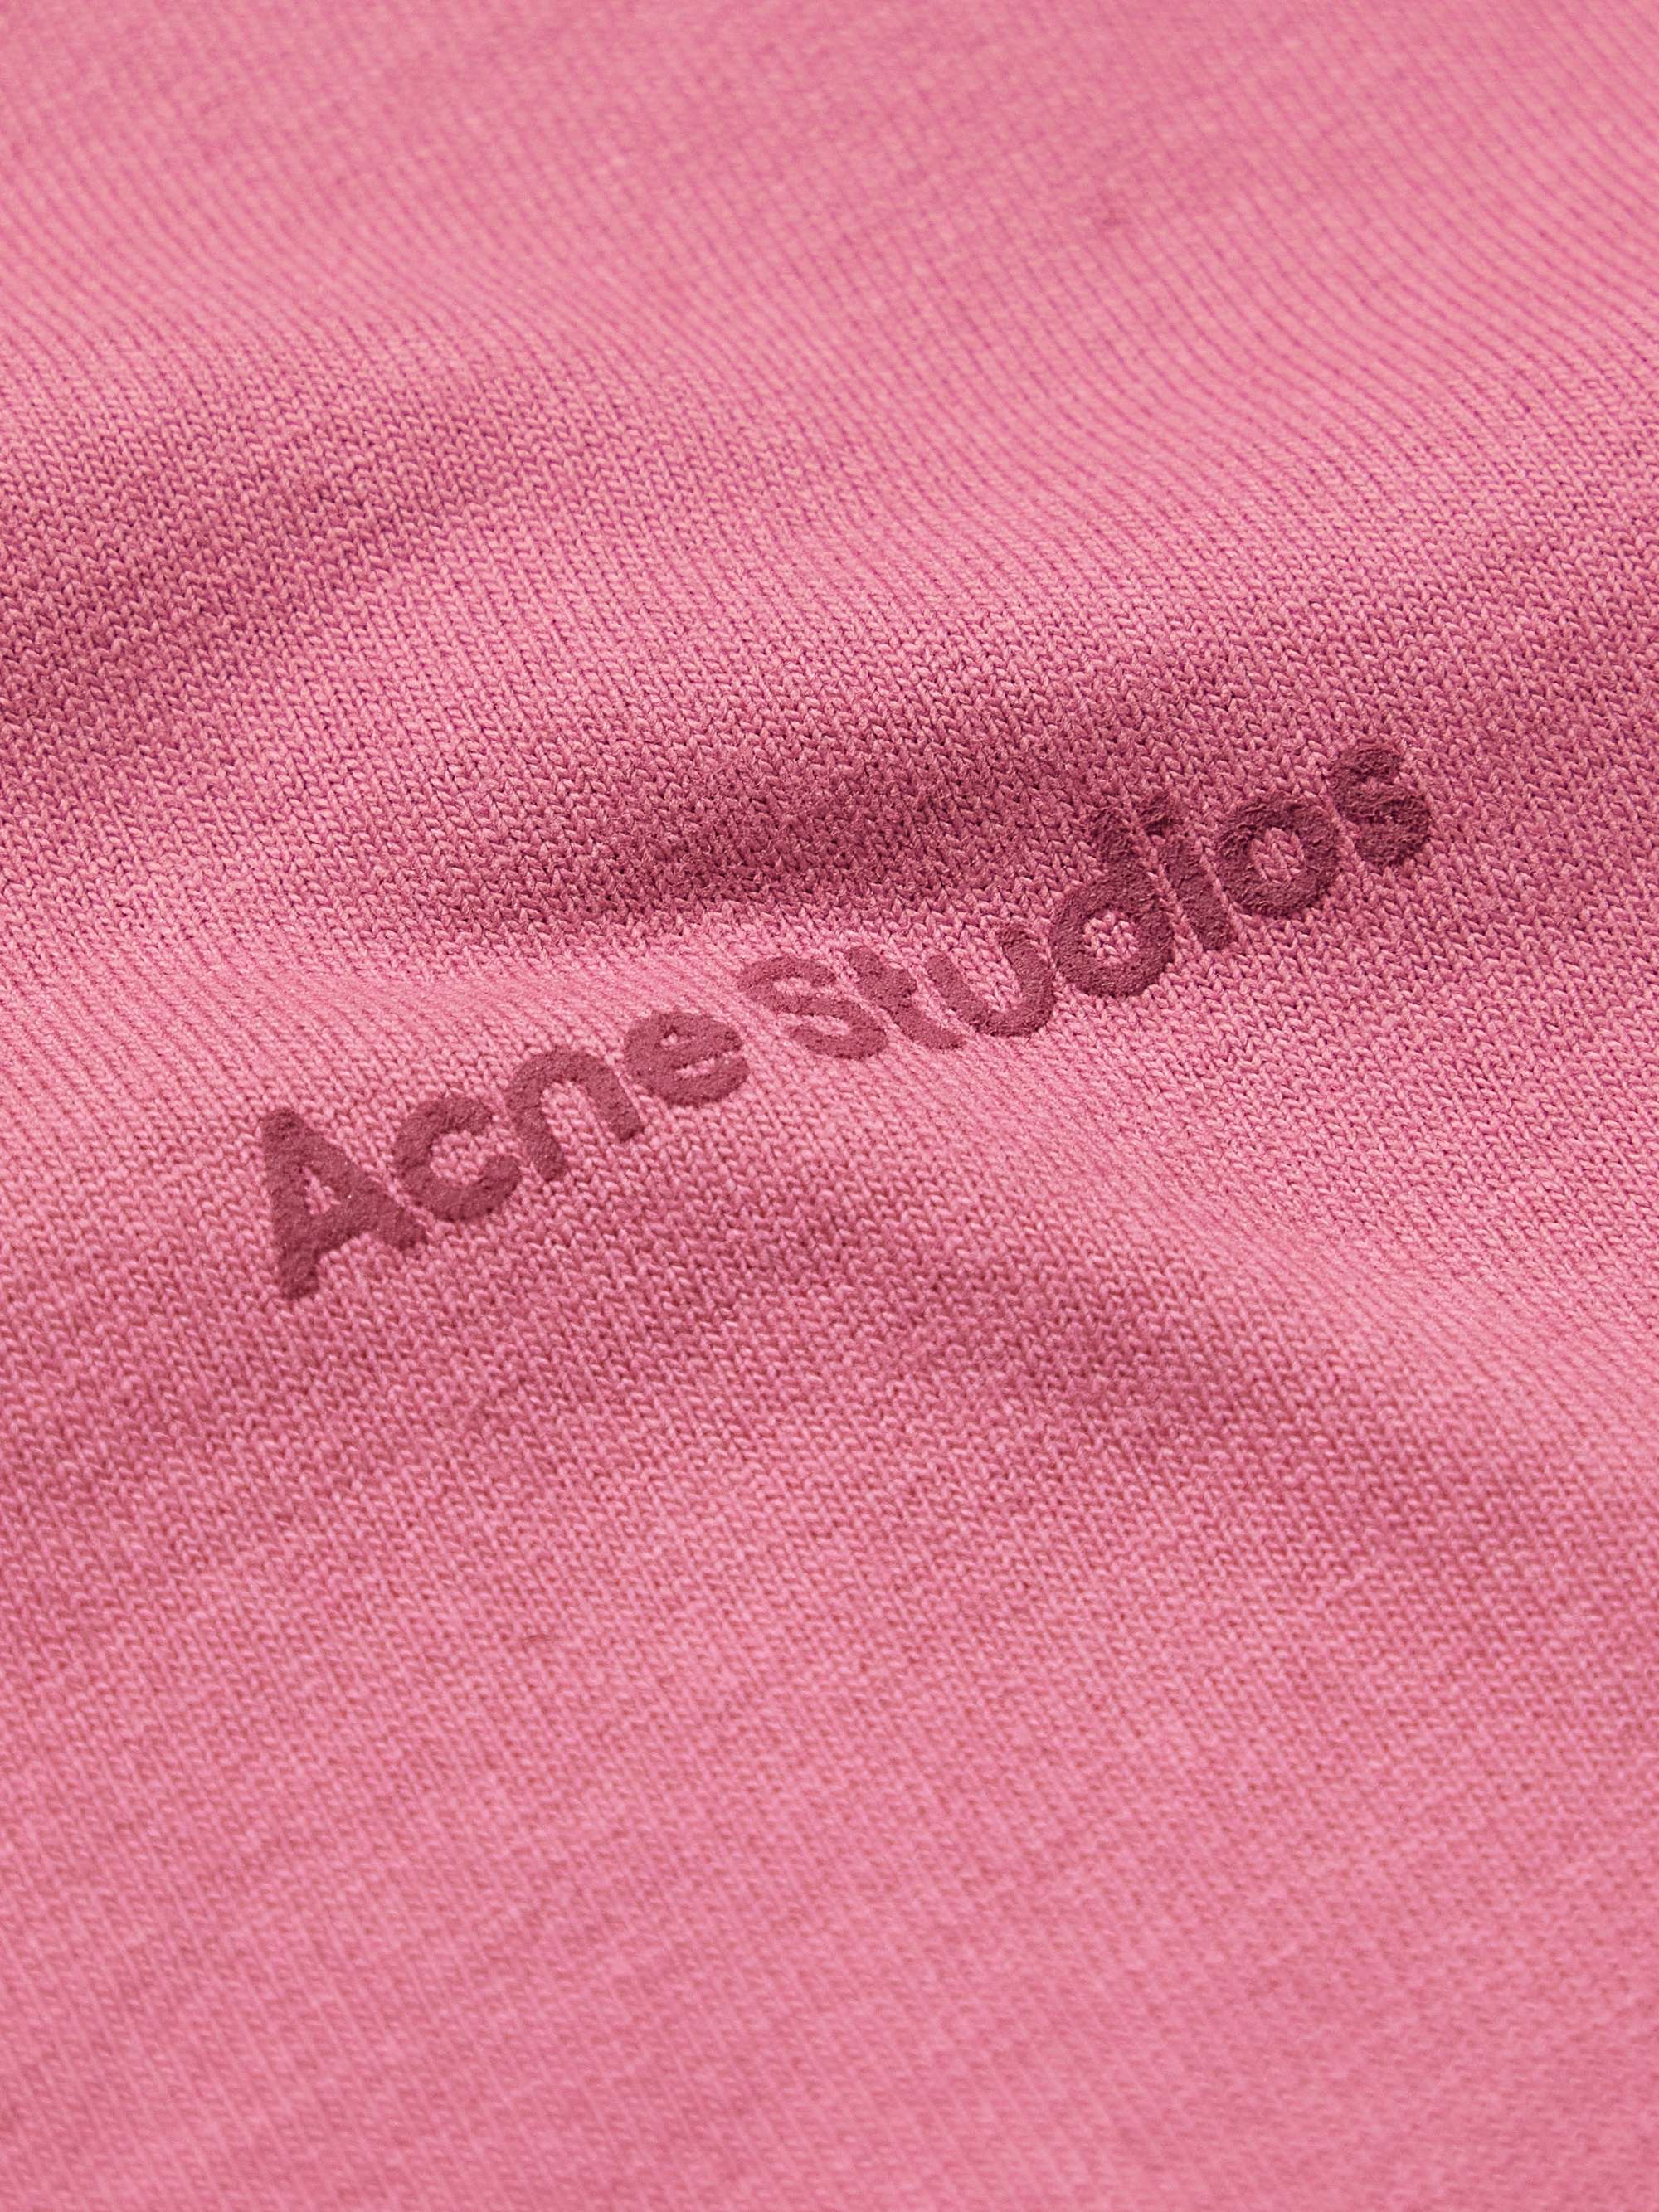 ACNE STUDIOS Logo-Print Cotton-Jersey T-Shirt